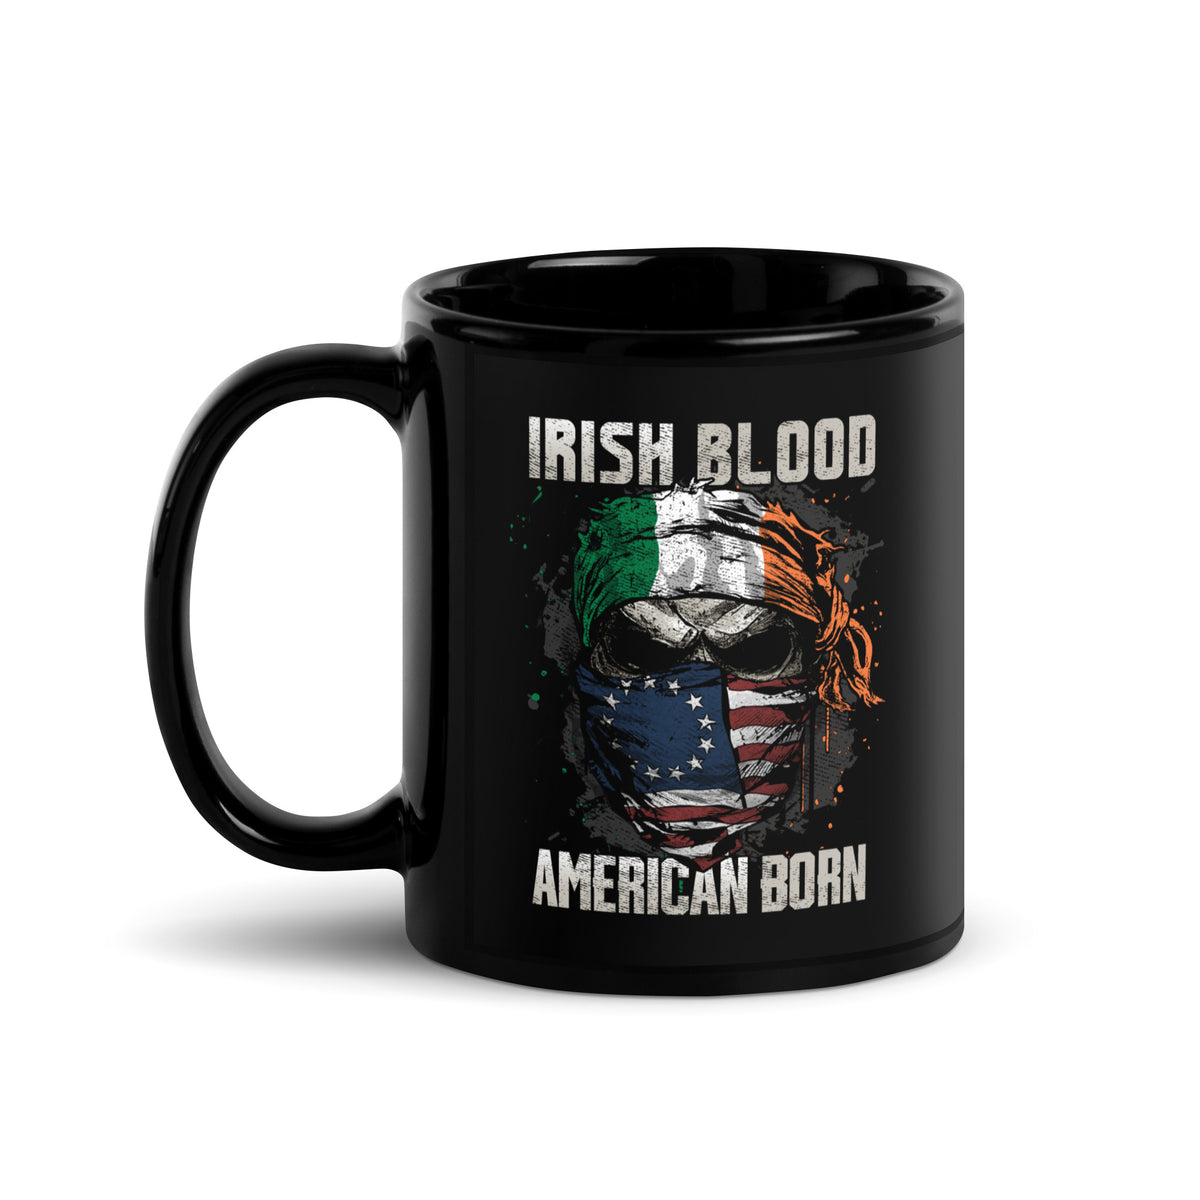 America with our Irish Blood. American Born Mug